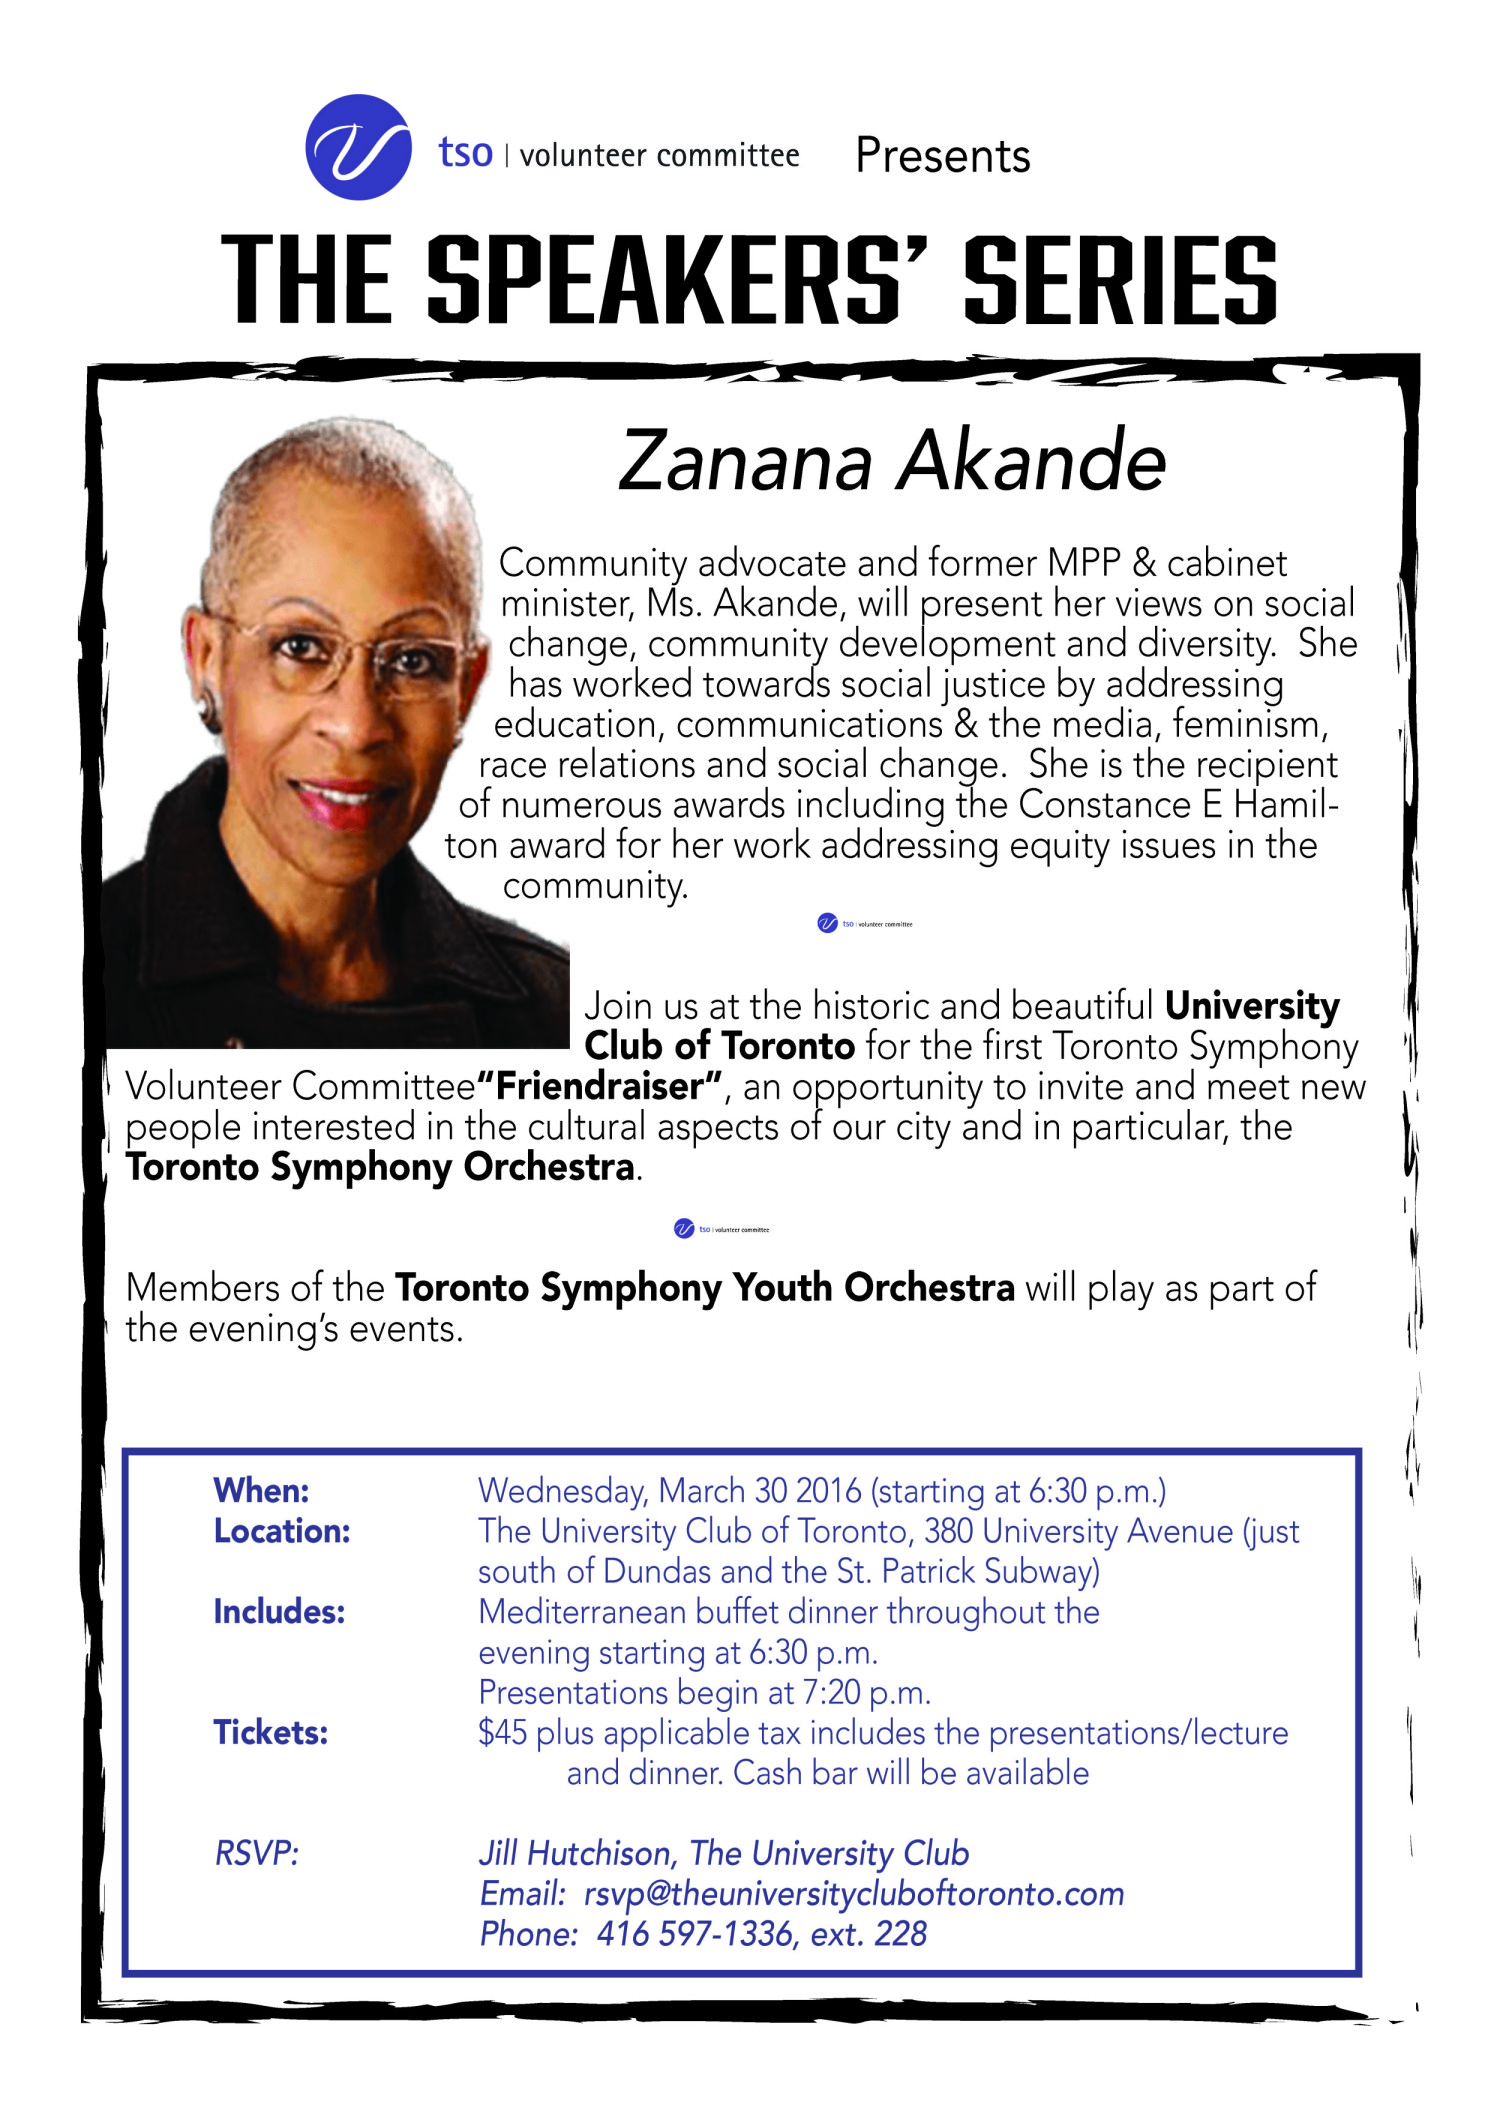 March 30, 2016 Speakers' Series Zanana Akande flyer